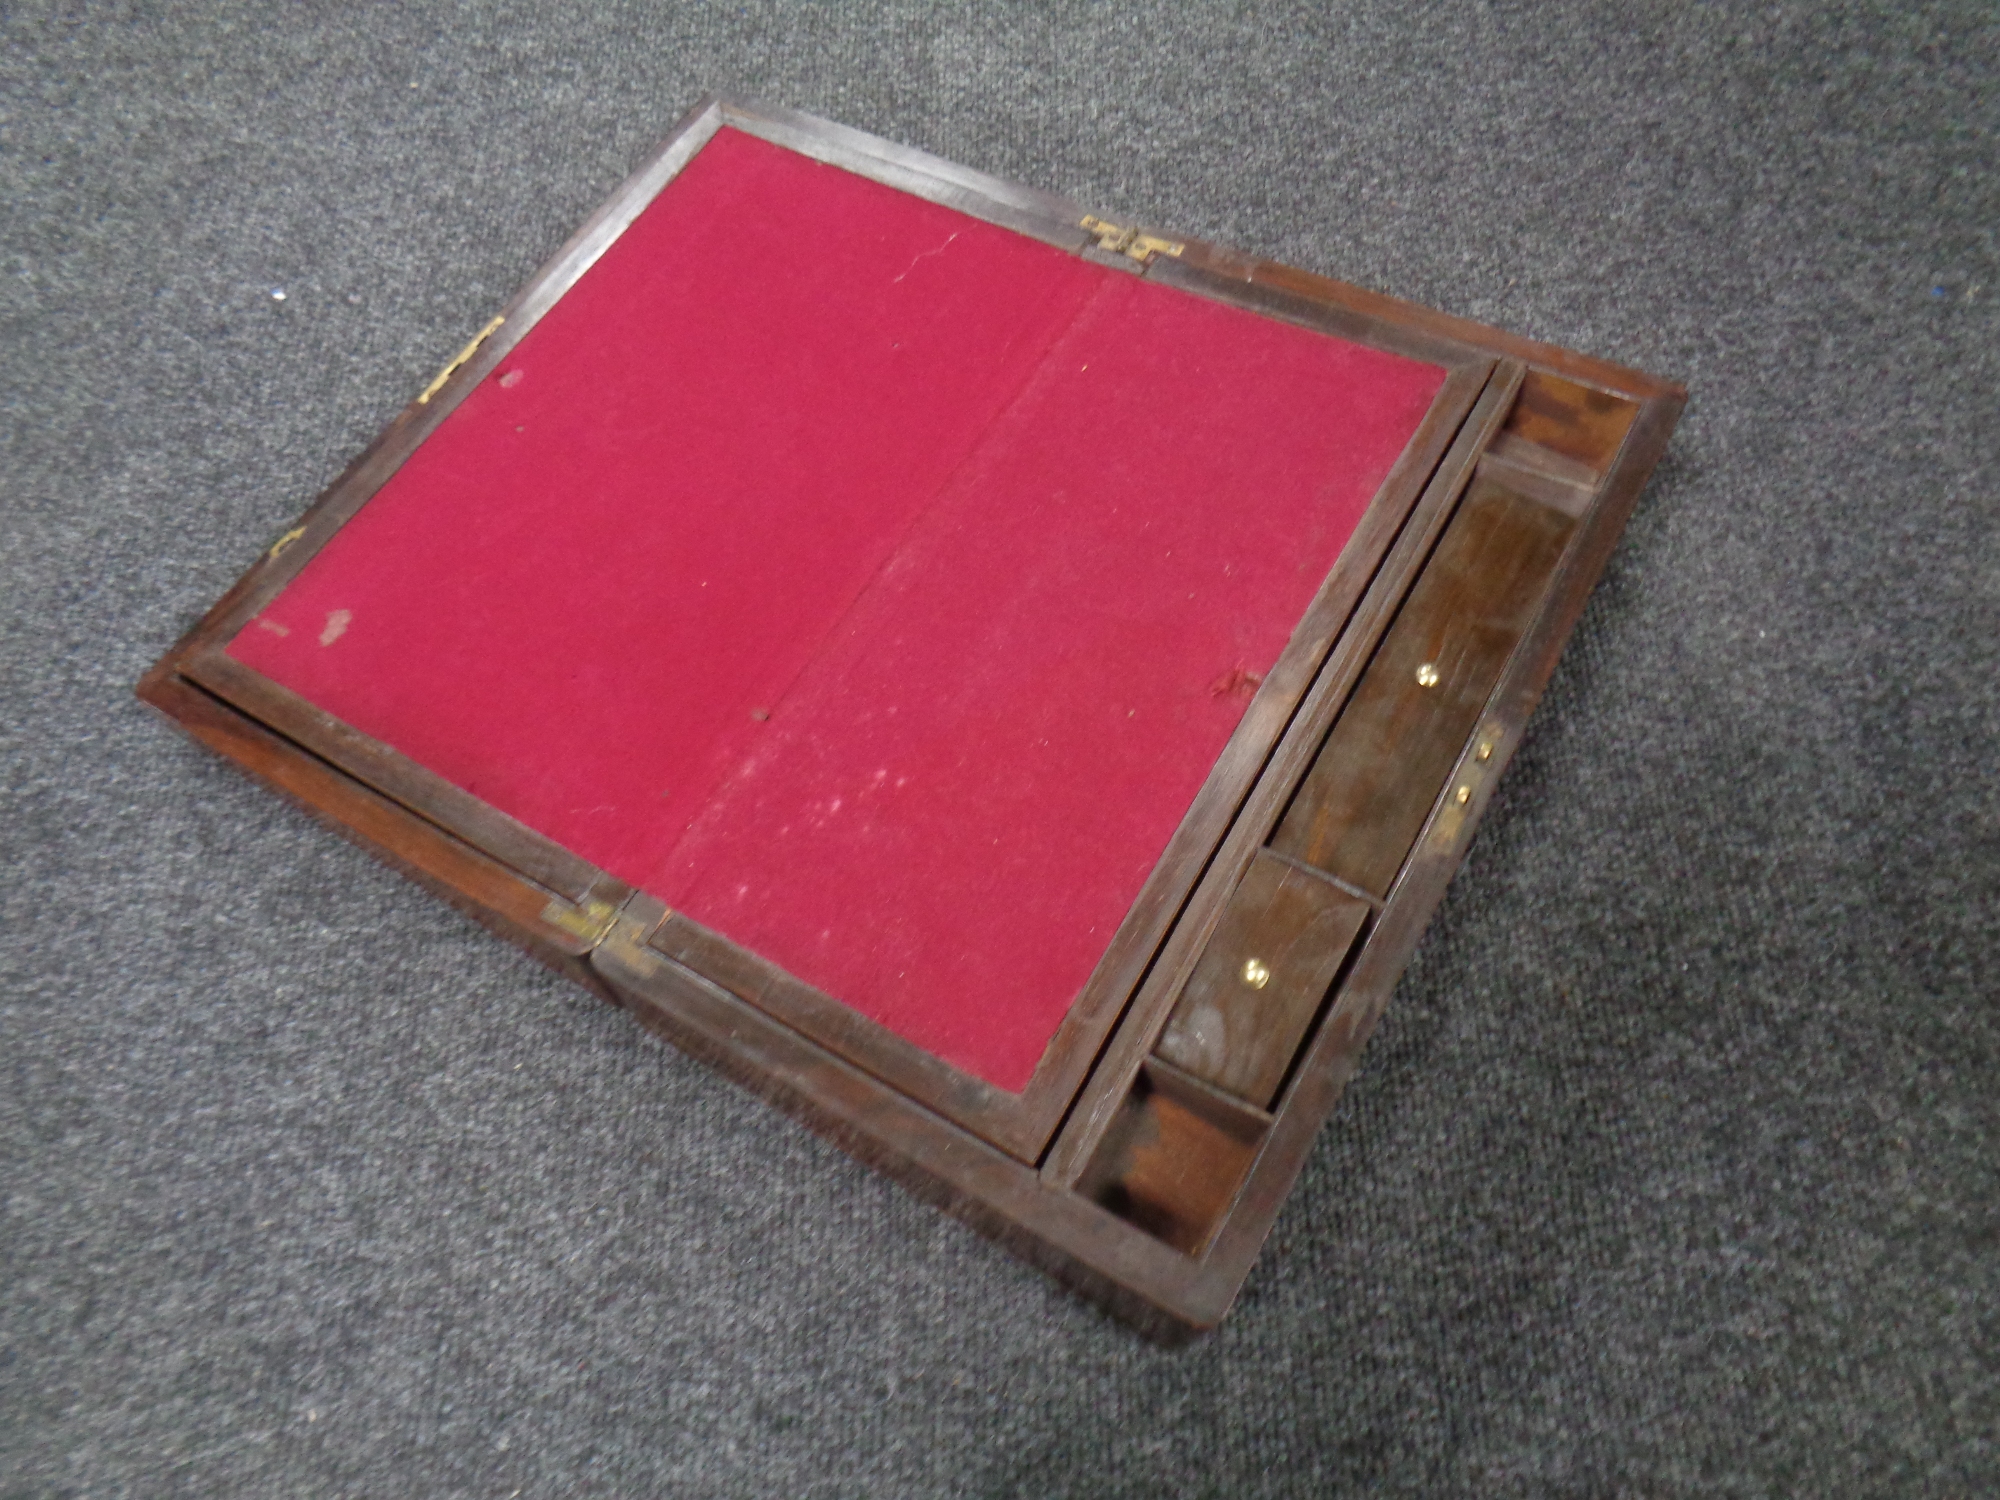 A 19th century brass bound writing box - Image 2 of 2